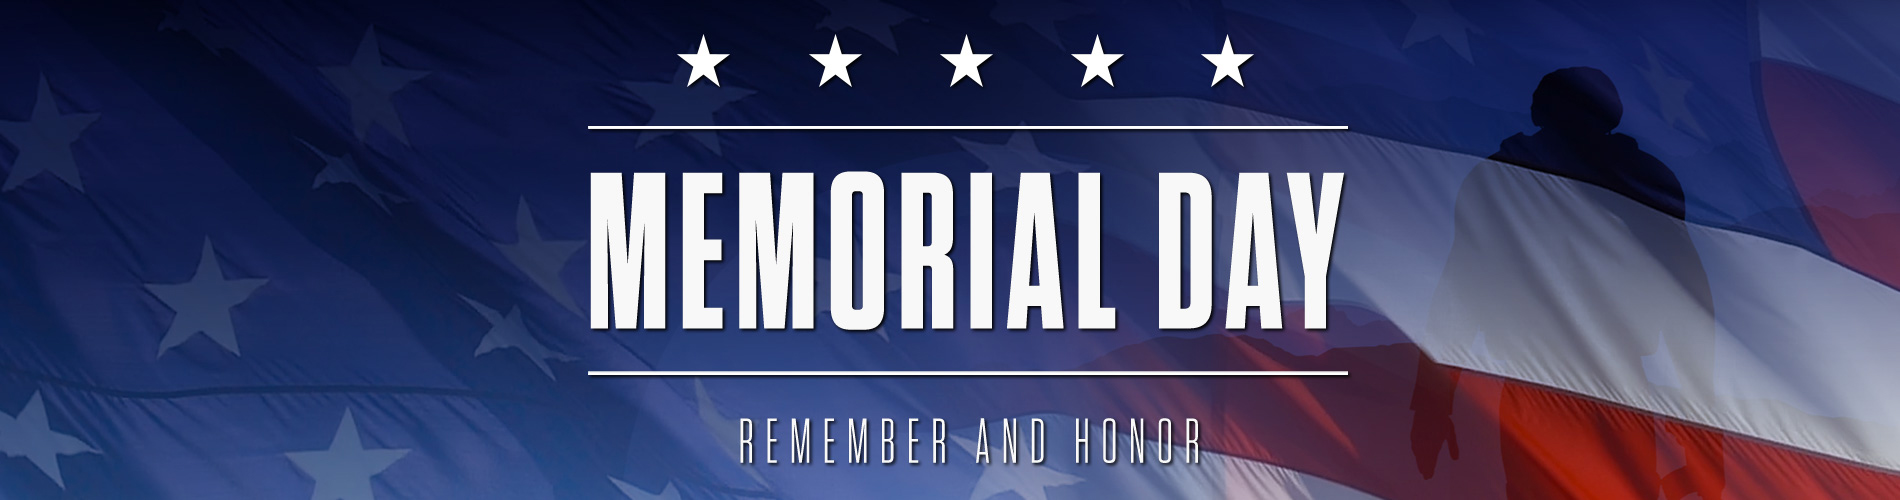 Memorial Day Web Banner